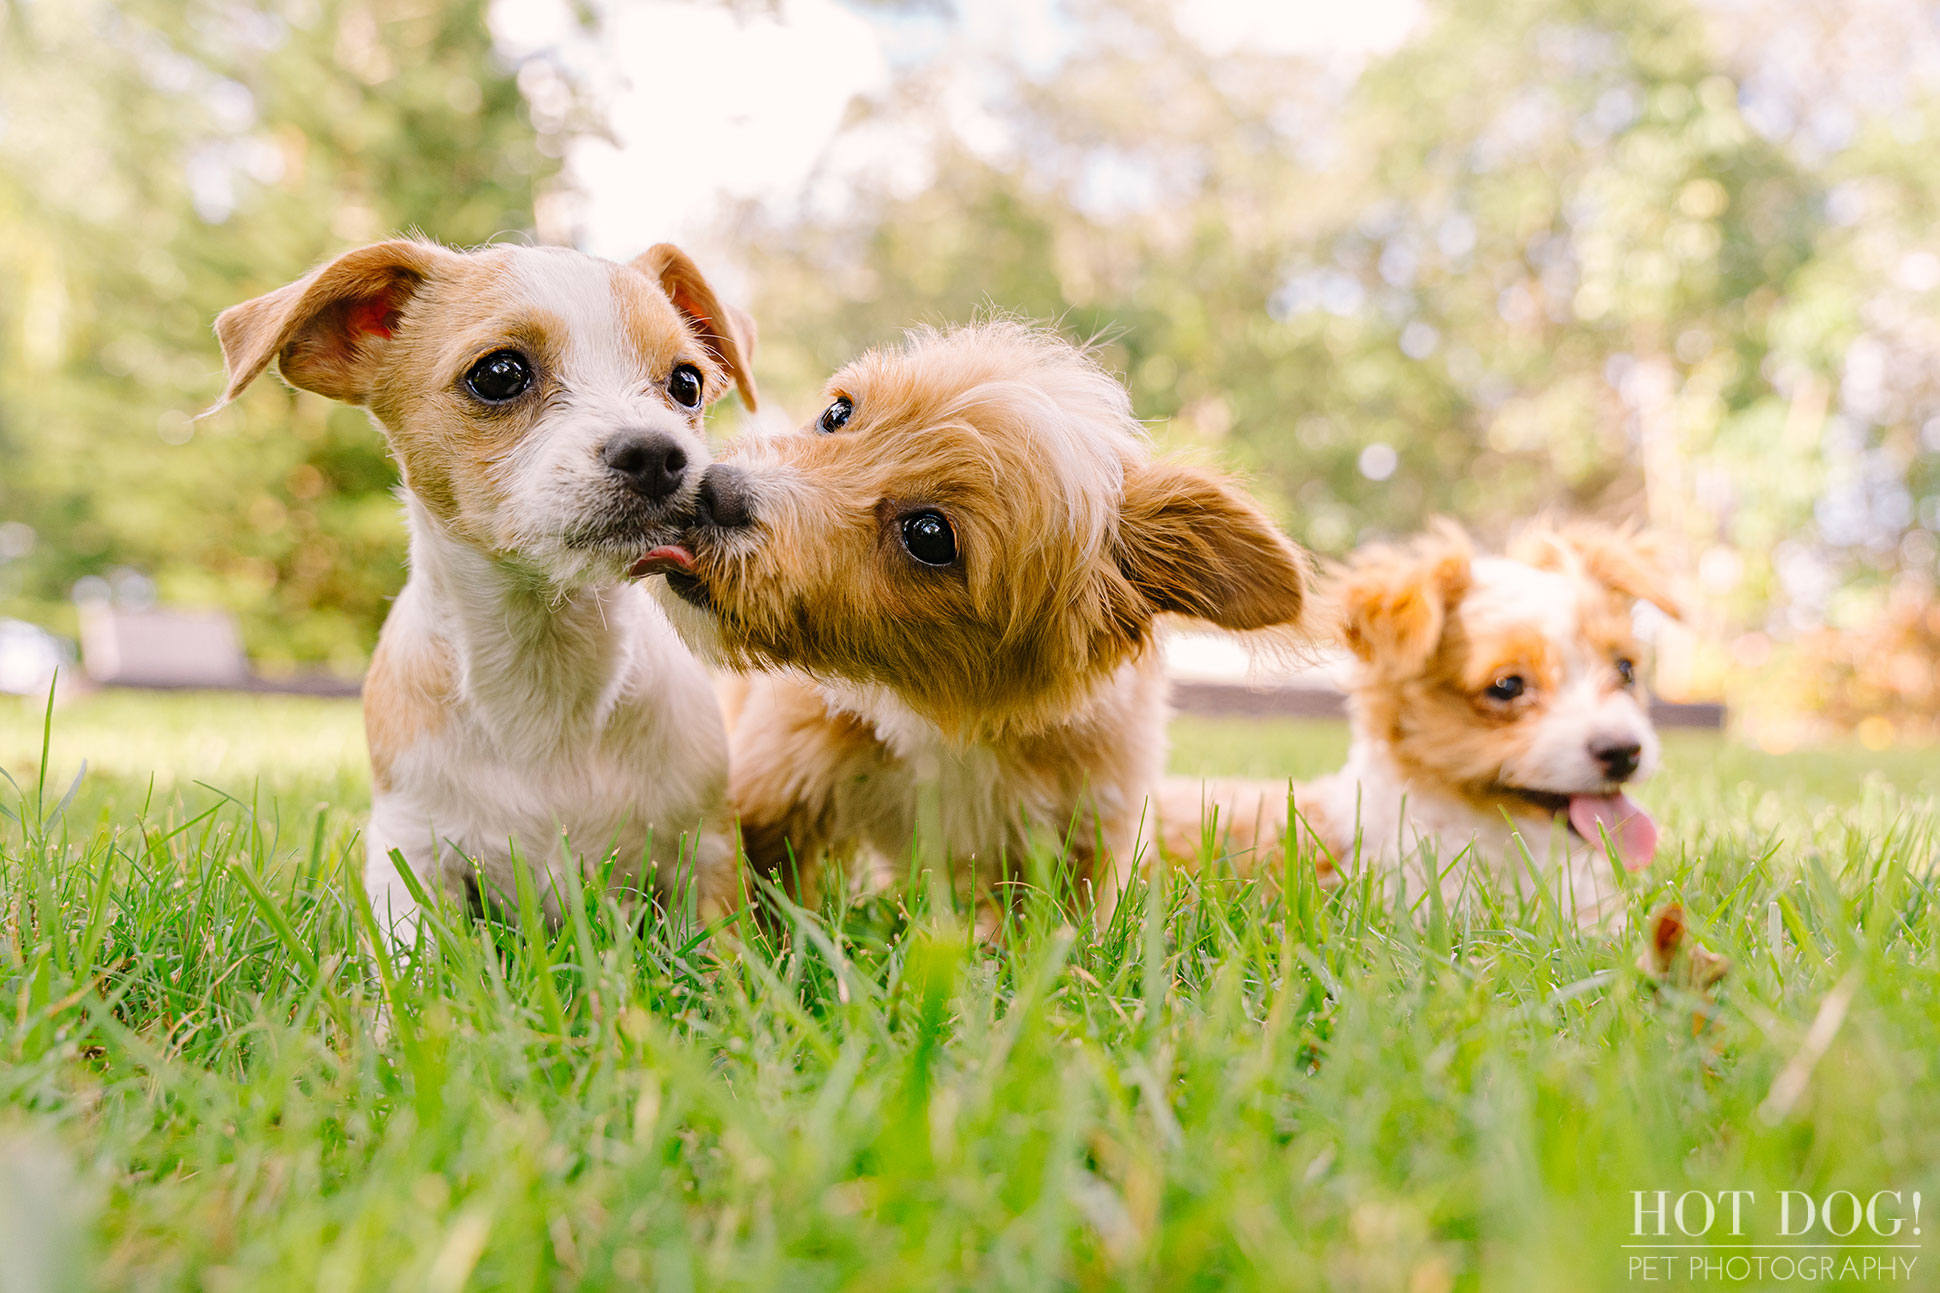 Orlando pet photographer Hot Dog! Pet Photography captures the love between a litter of Malchipoo puppies.